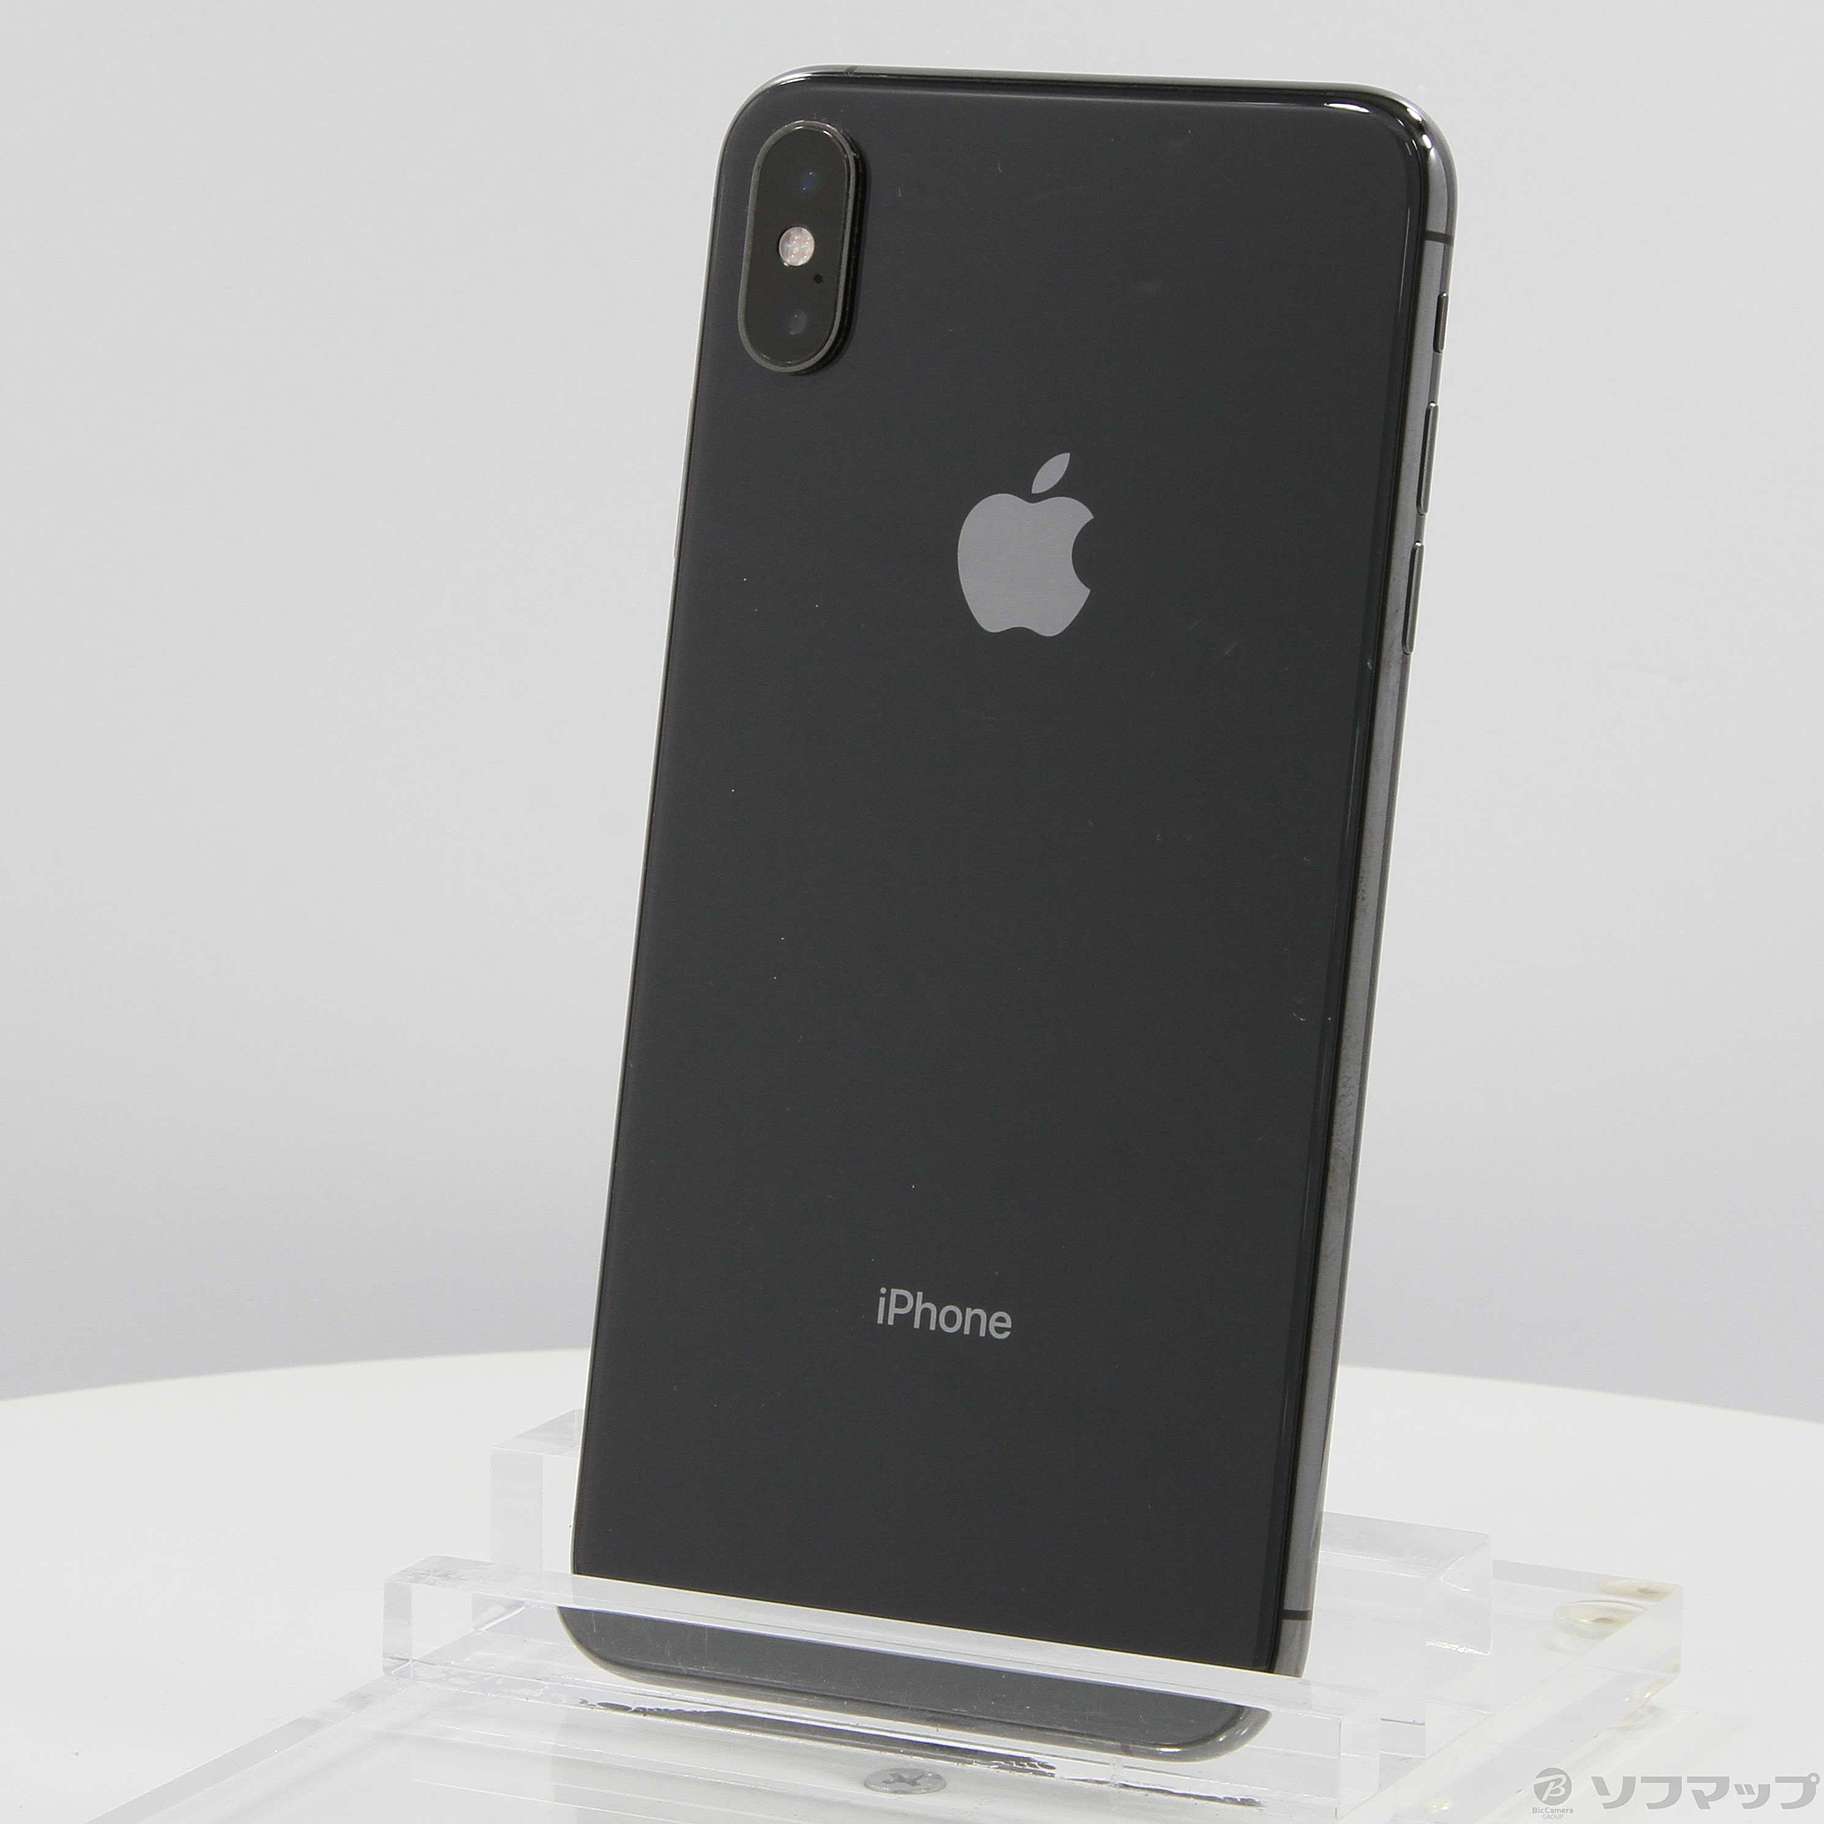 iPhoneXs Space Grayスペースグレー黒 256GB SIMフリー-